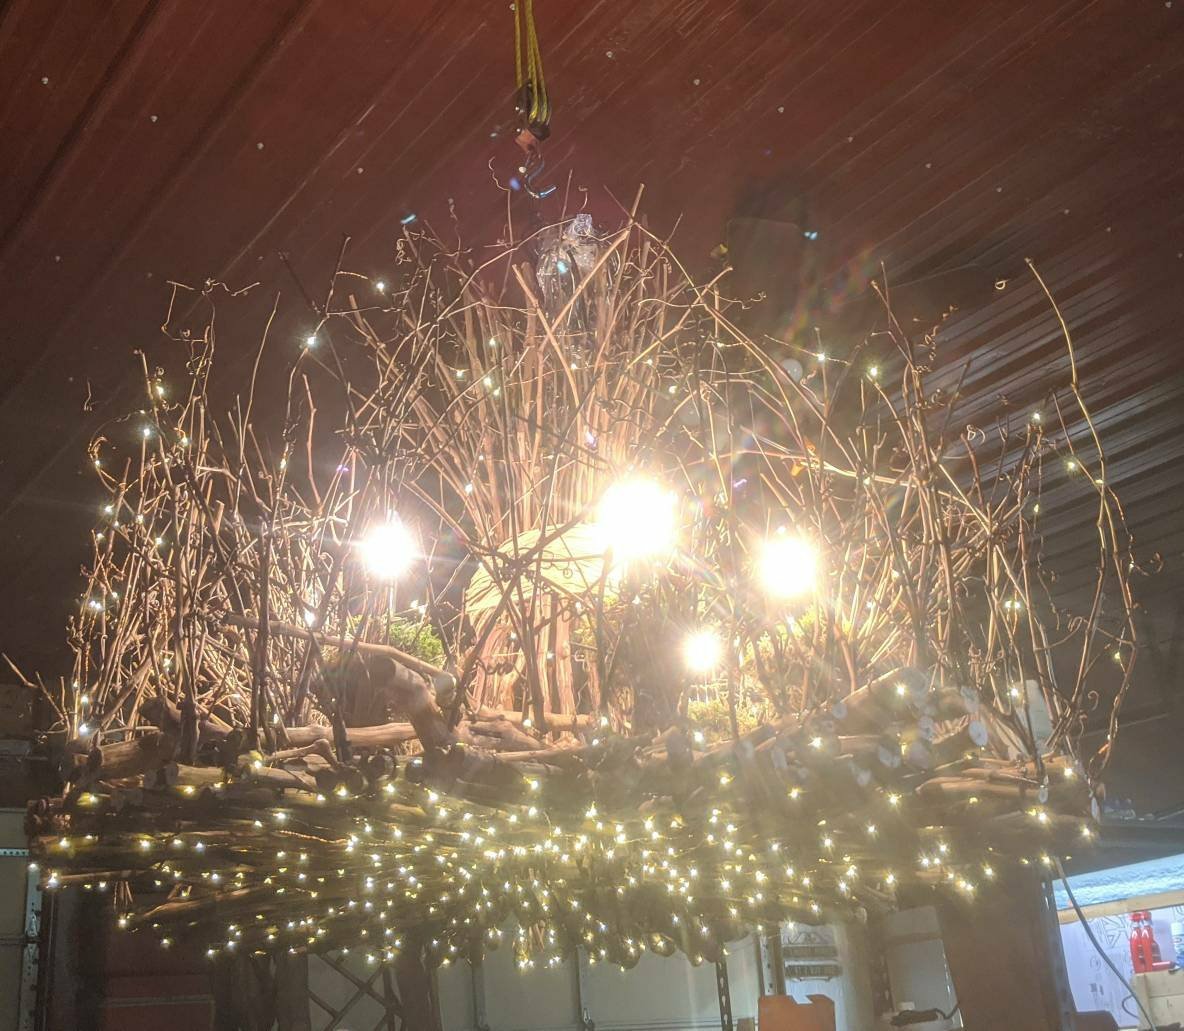 Exquisite grapevine chandelier#etsy shop: The Castle Rock - 6 + 1 Twig Light - Rustic Grapevine Chandelier - Down Light - 500 leds - Branch Light Fixture -Click Learn more about item #etsy #entryway #branchchandelier #rusticchandelier
 etsy.me/3jBGVB1